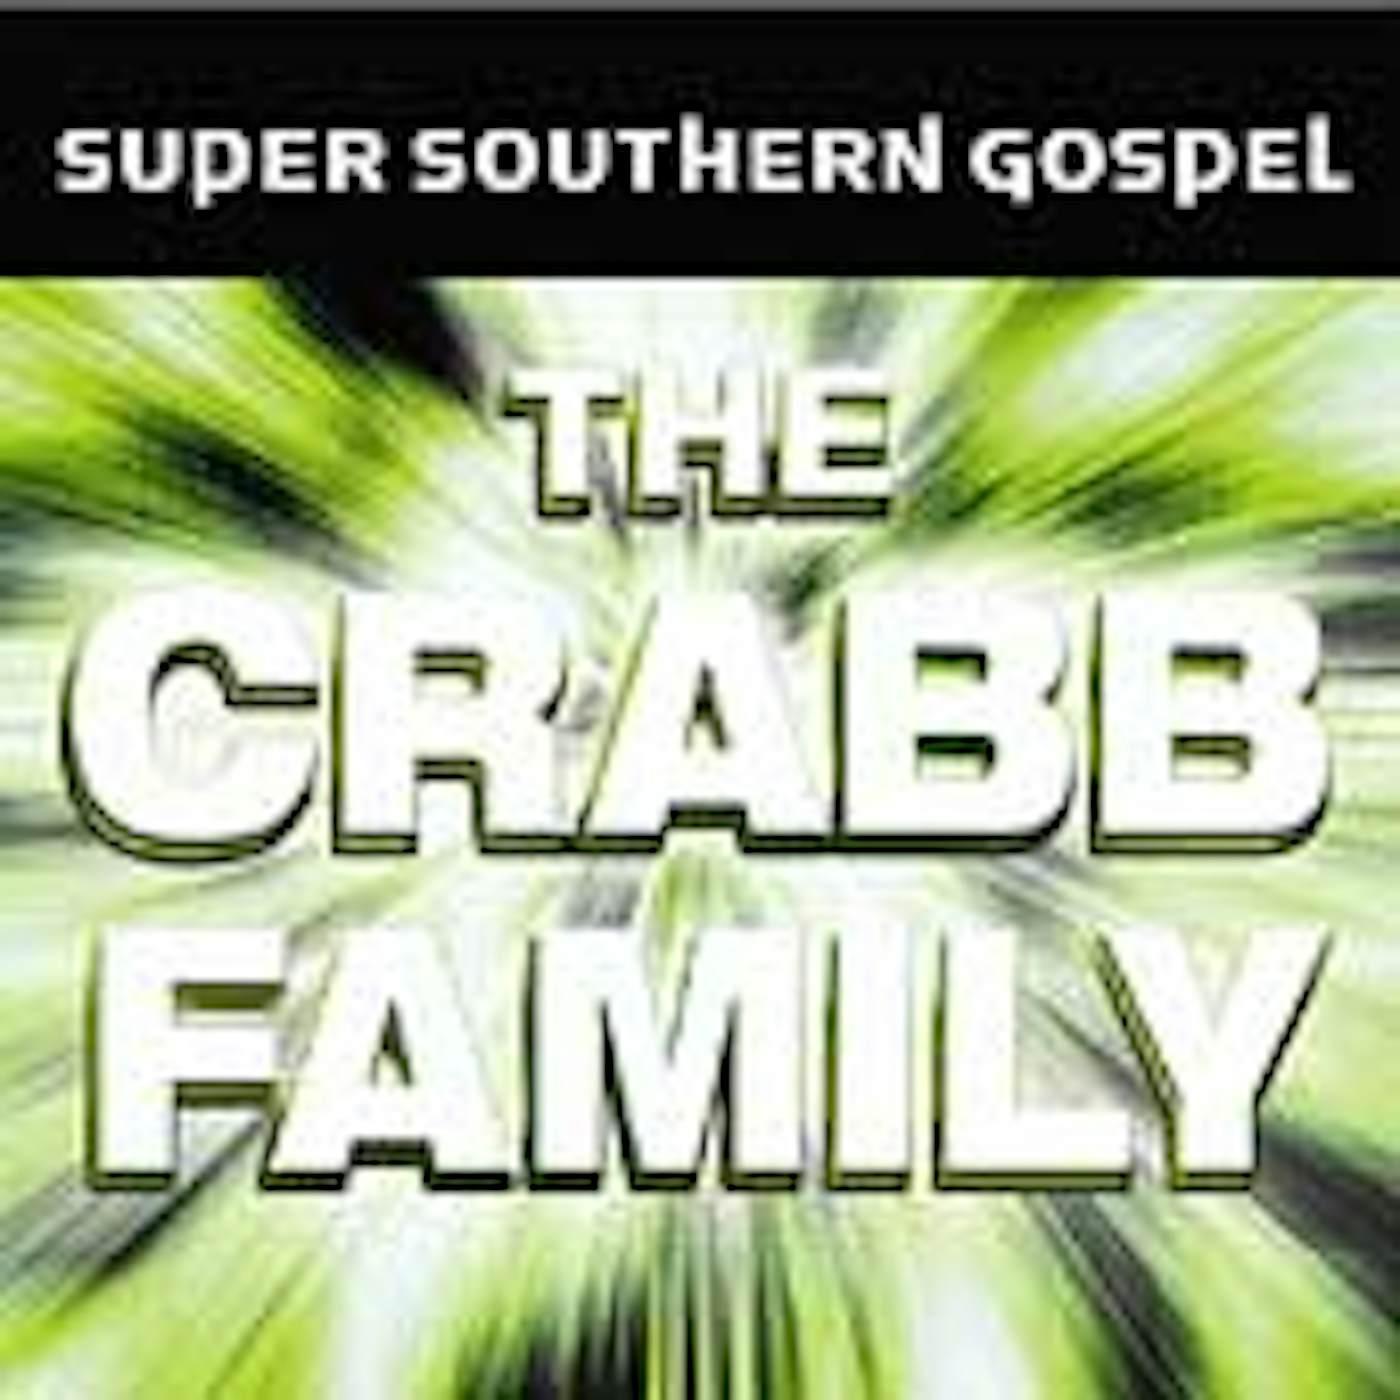 The Crabb Family SUPER SOUTHERN GOSPEL CD